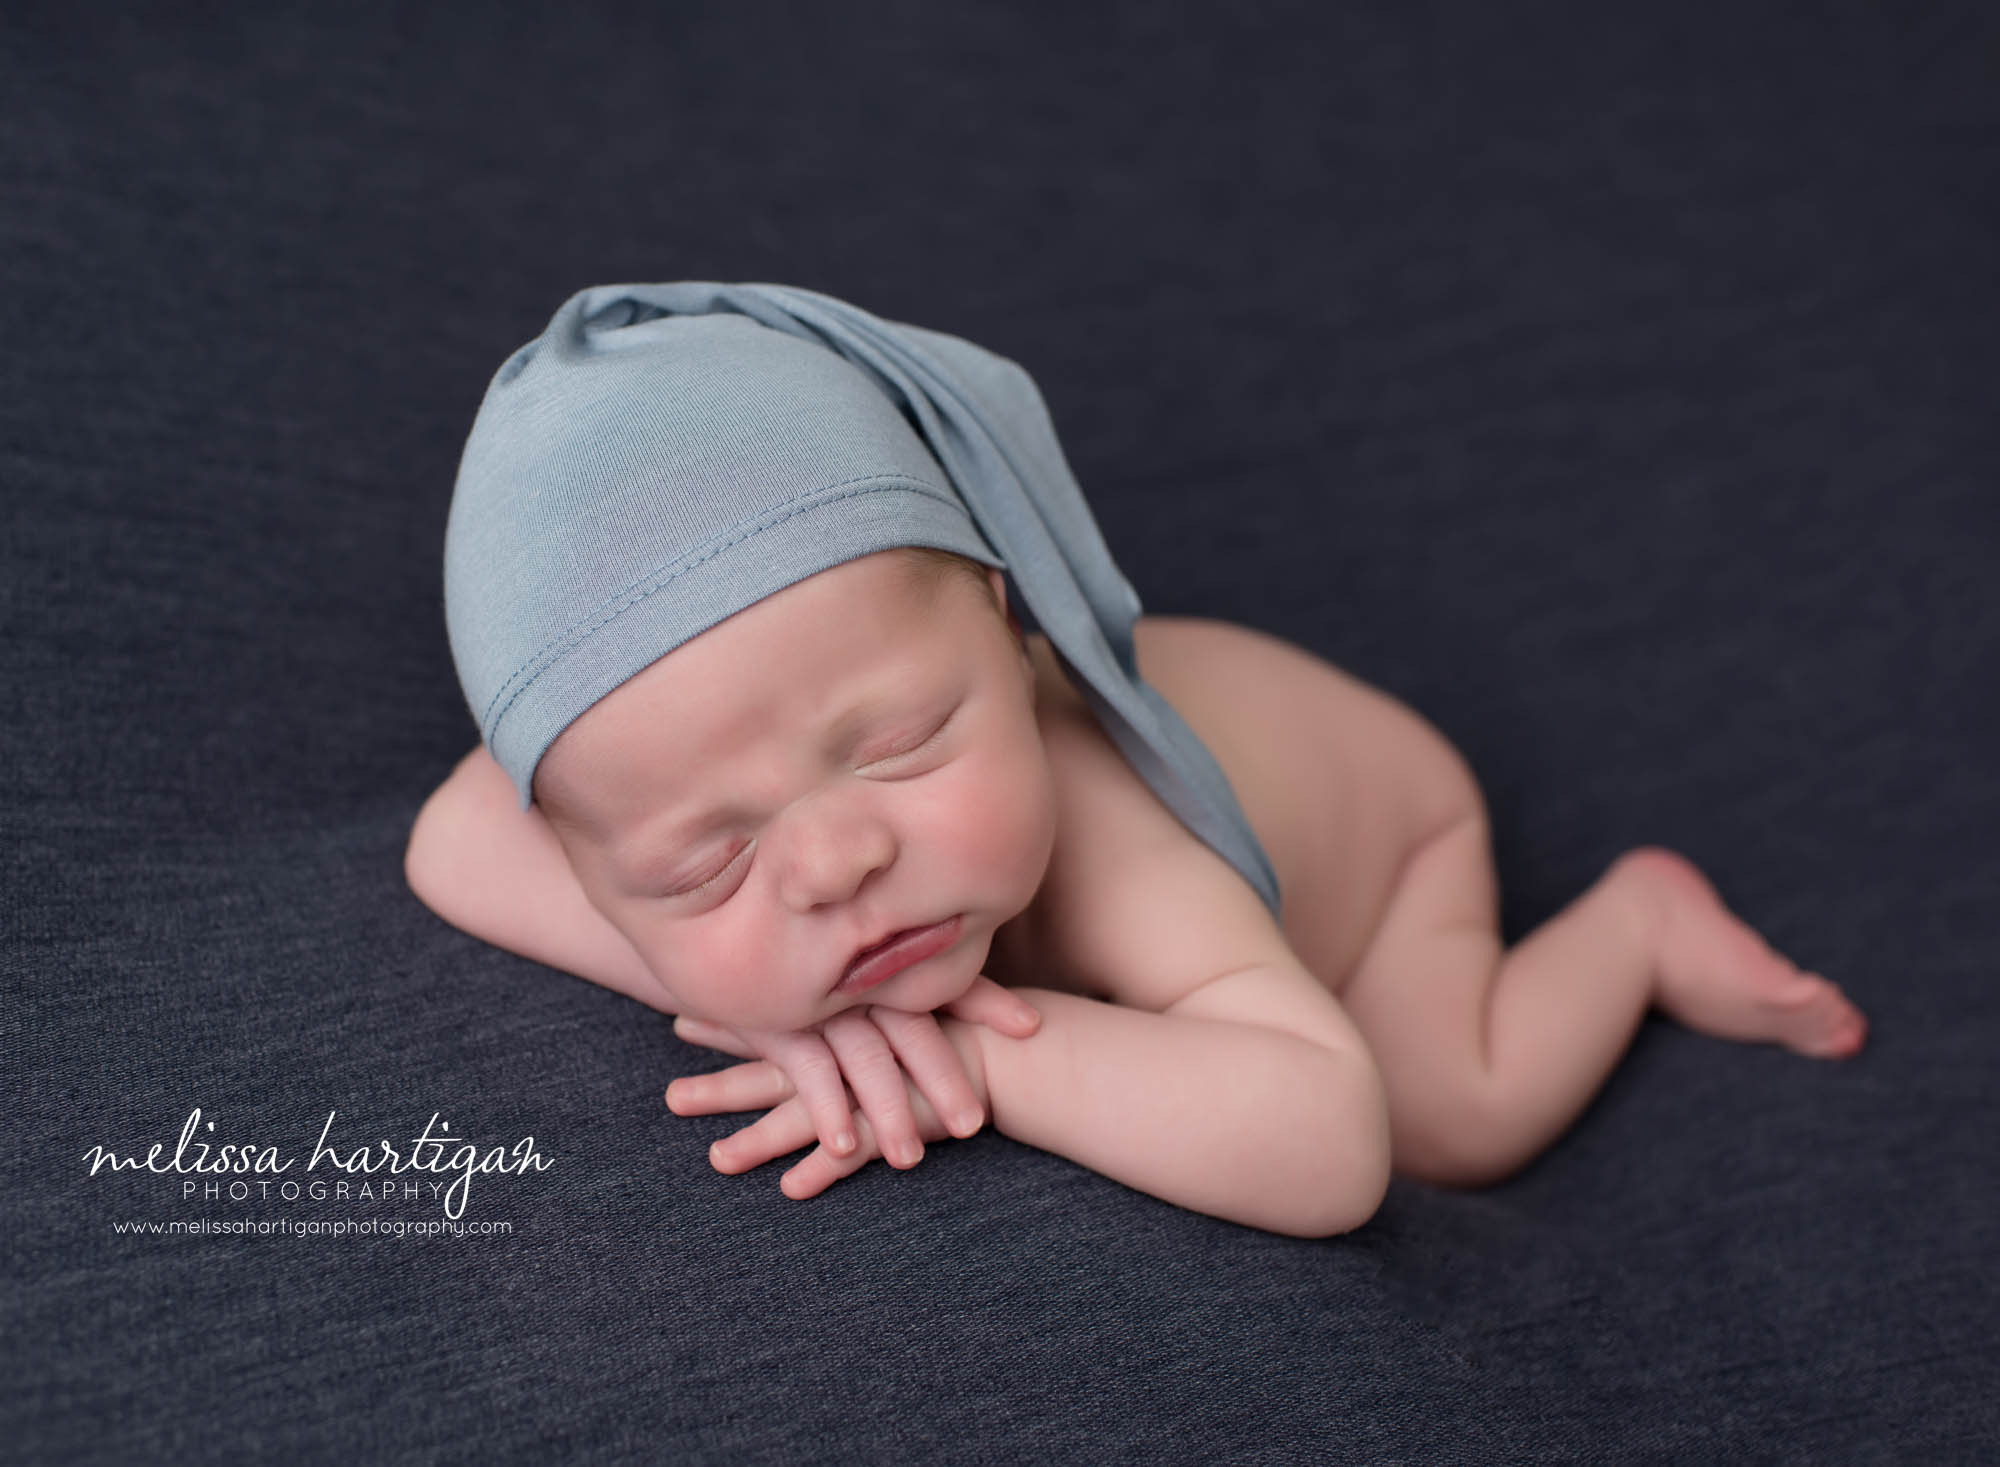 newborn baby boy posed on tummy with hands under chin wearing light blue sleepy cap